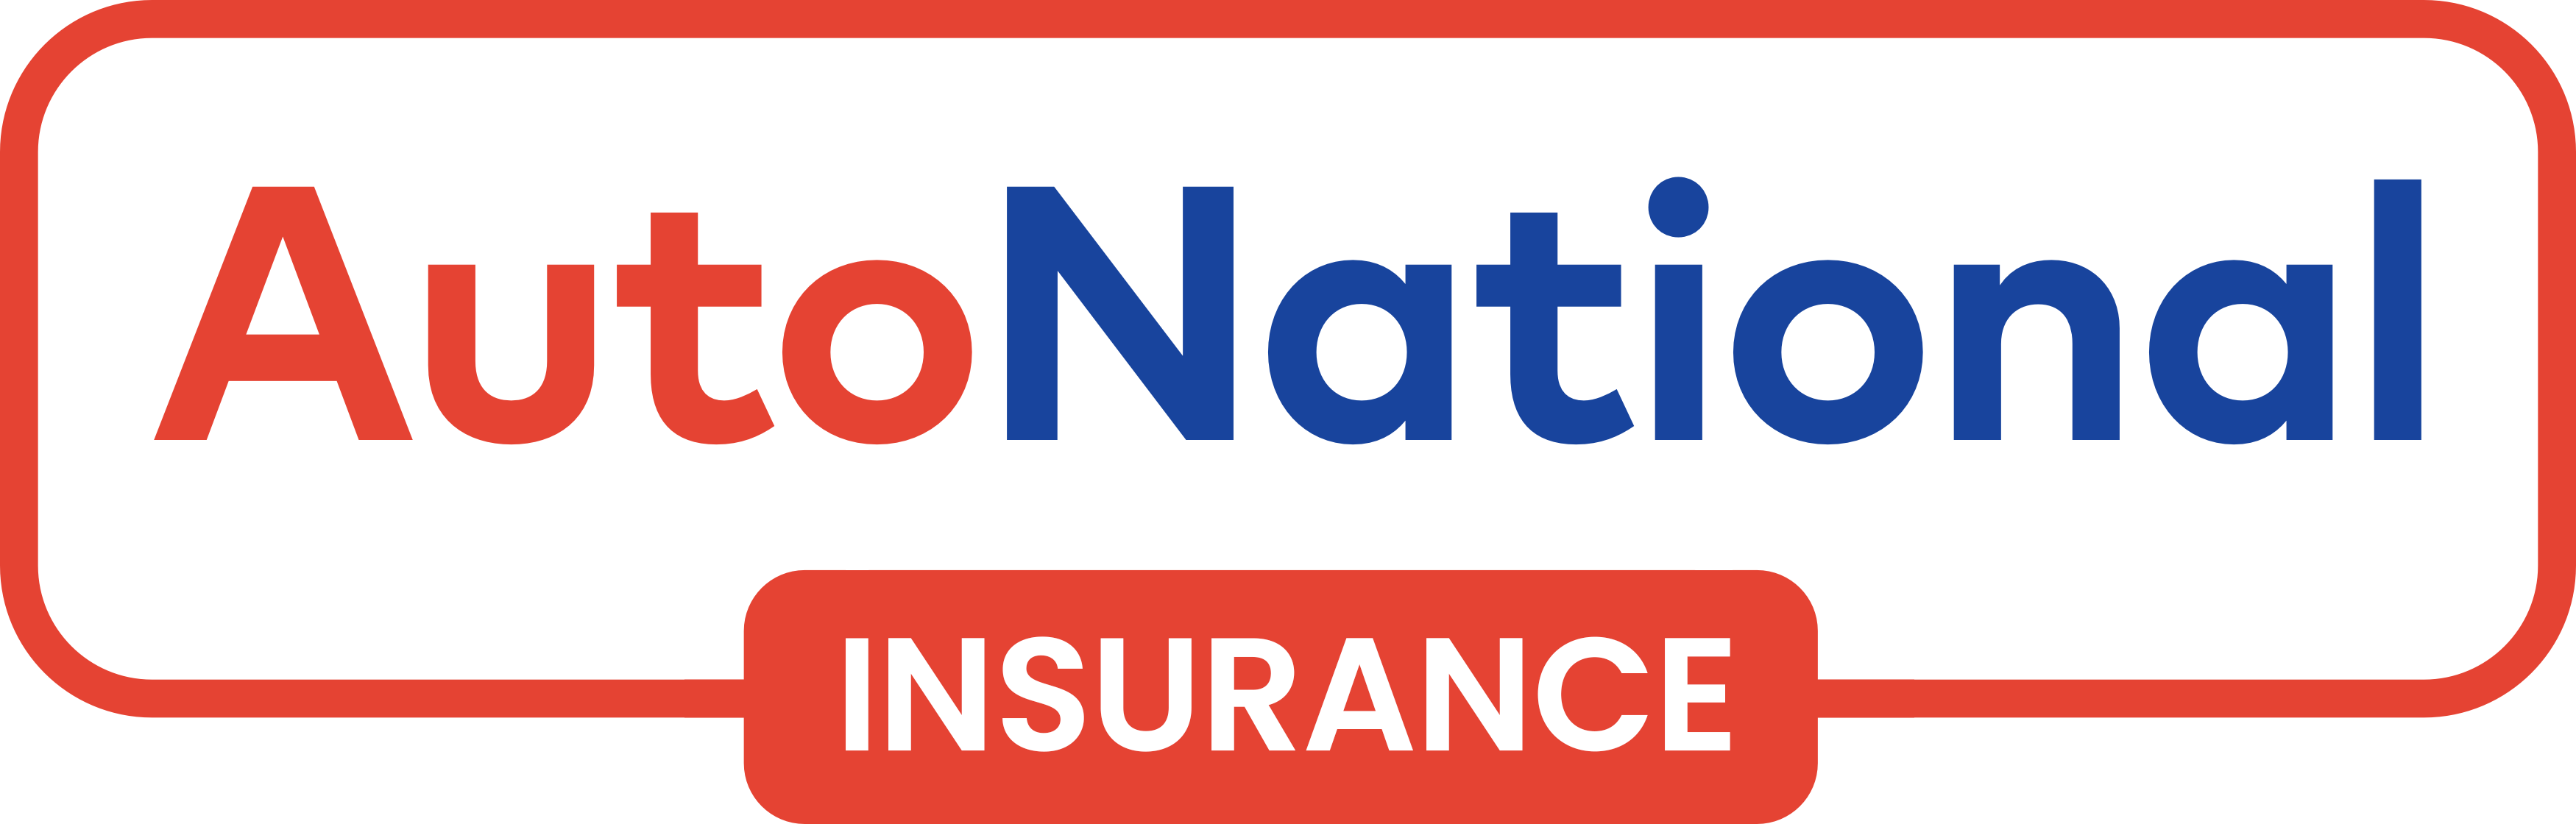 Autonational Insurance